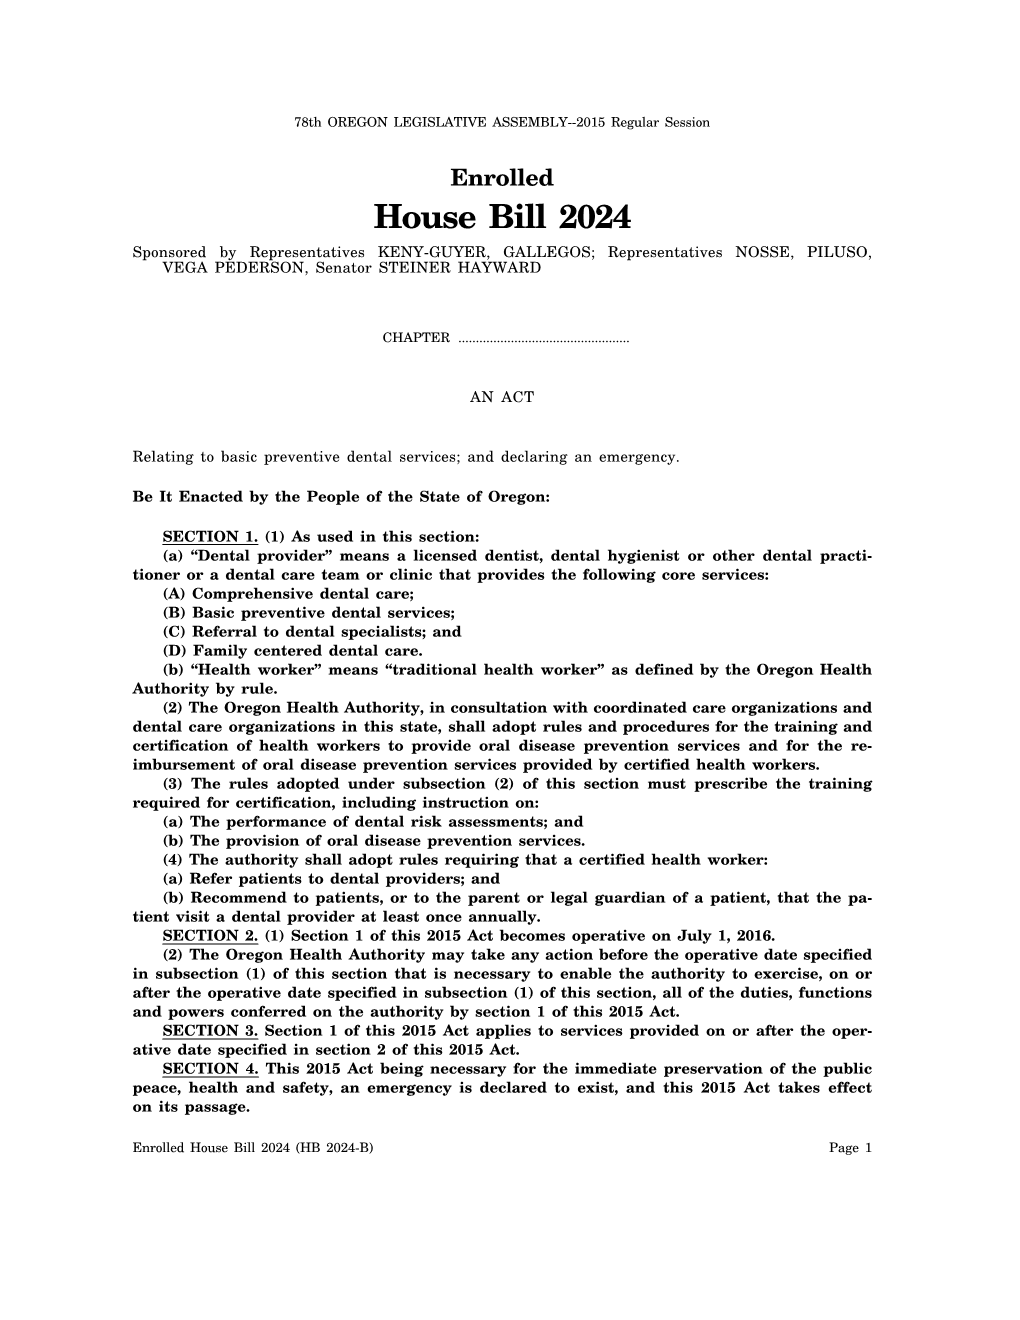 House Bill 2024 Sponsored by Representatives KENY-GUYER, GALLEGOS; Representatives NOSSE, PILUSO, VEGA PEDERSON, Senator STEINER HAYWARD